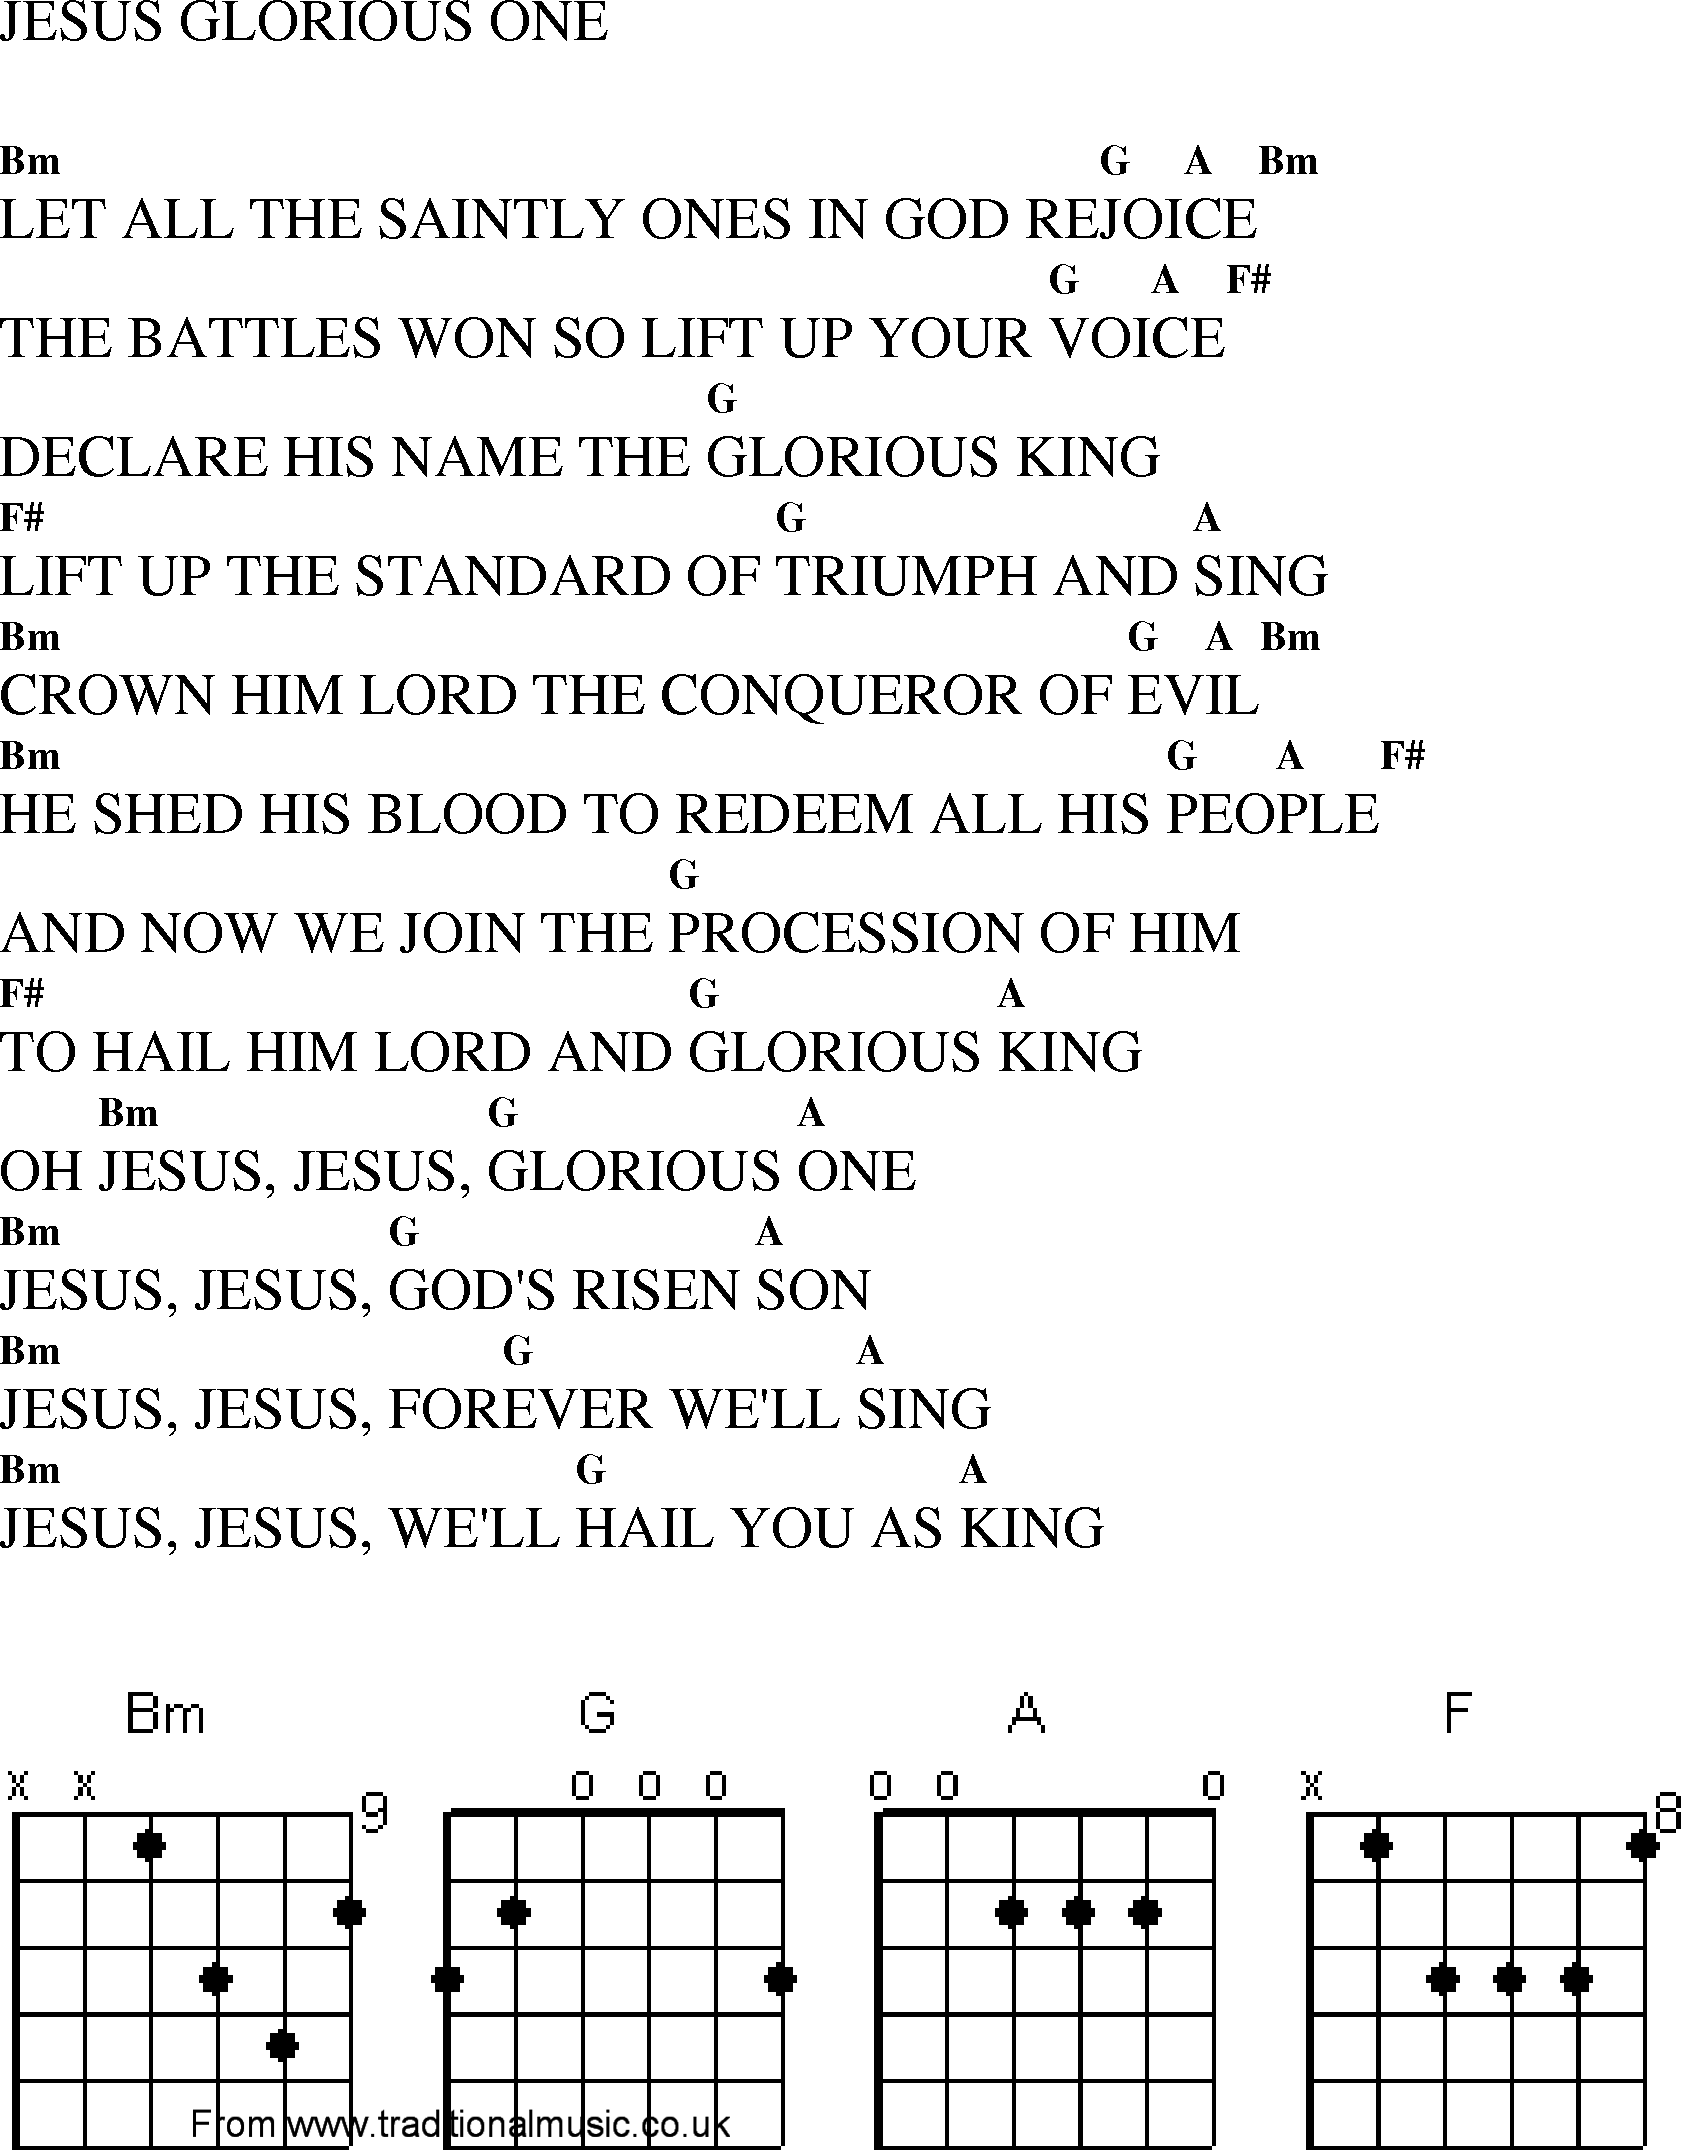 Gospel Song: jesus_glorious_one, lyrics and chords.